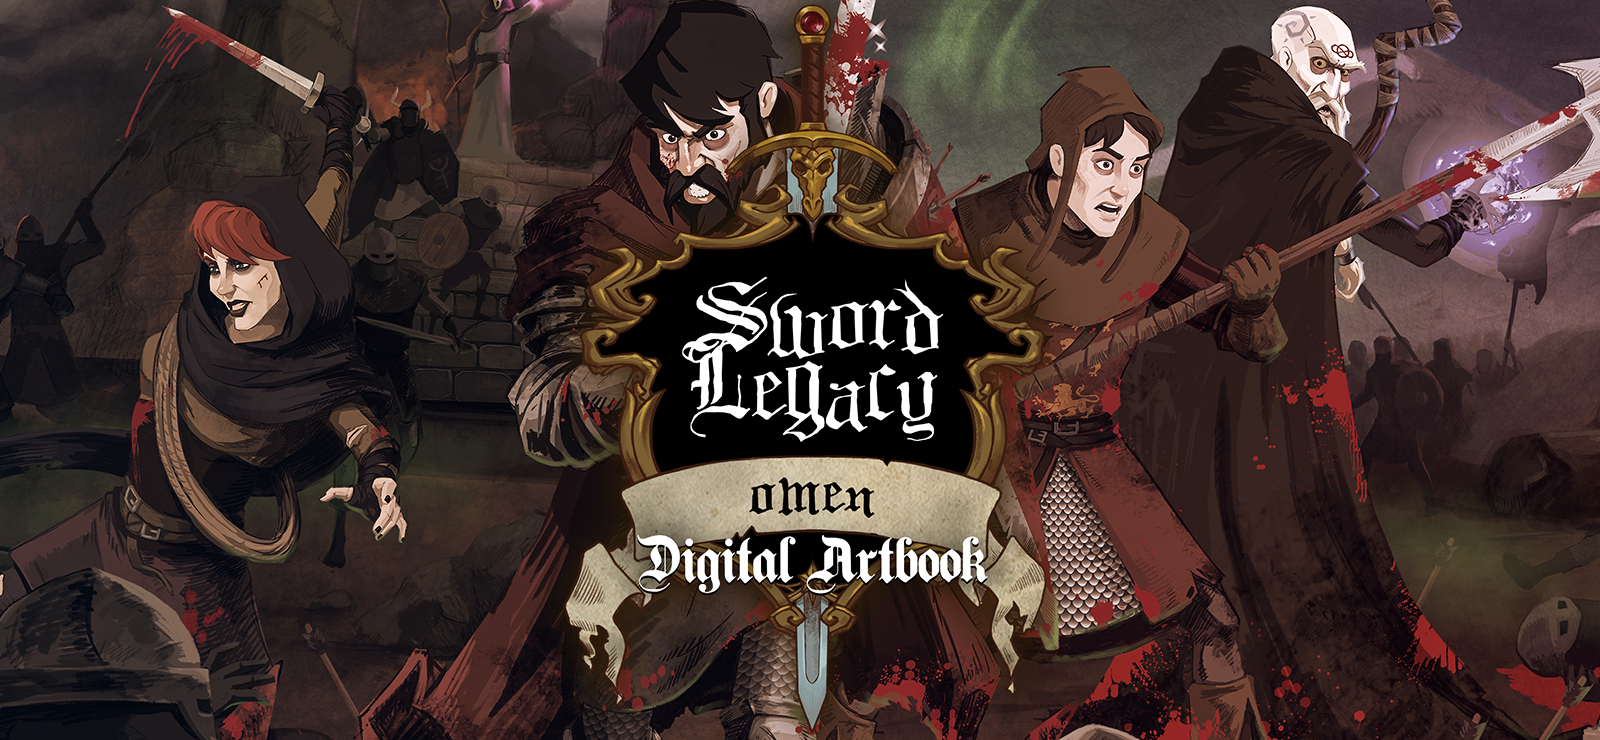 Sword Legacy Omen - Digital Artbook